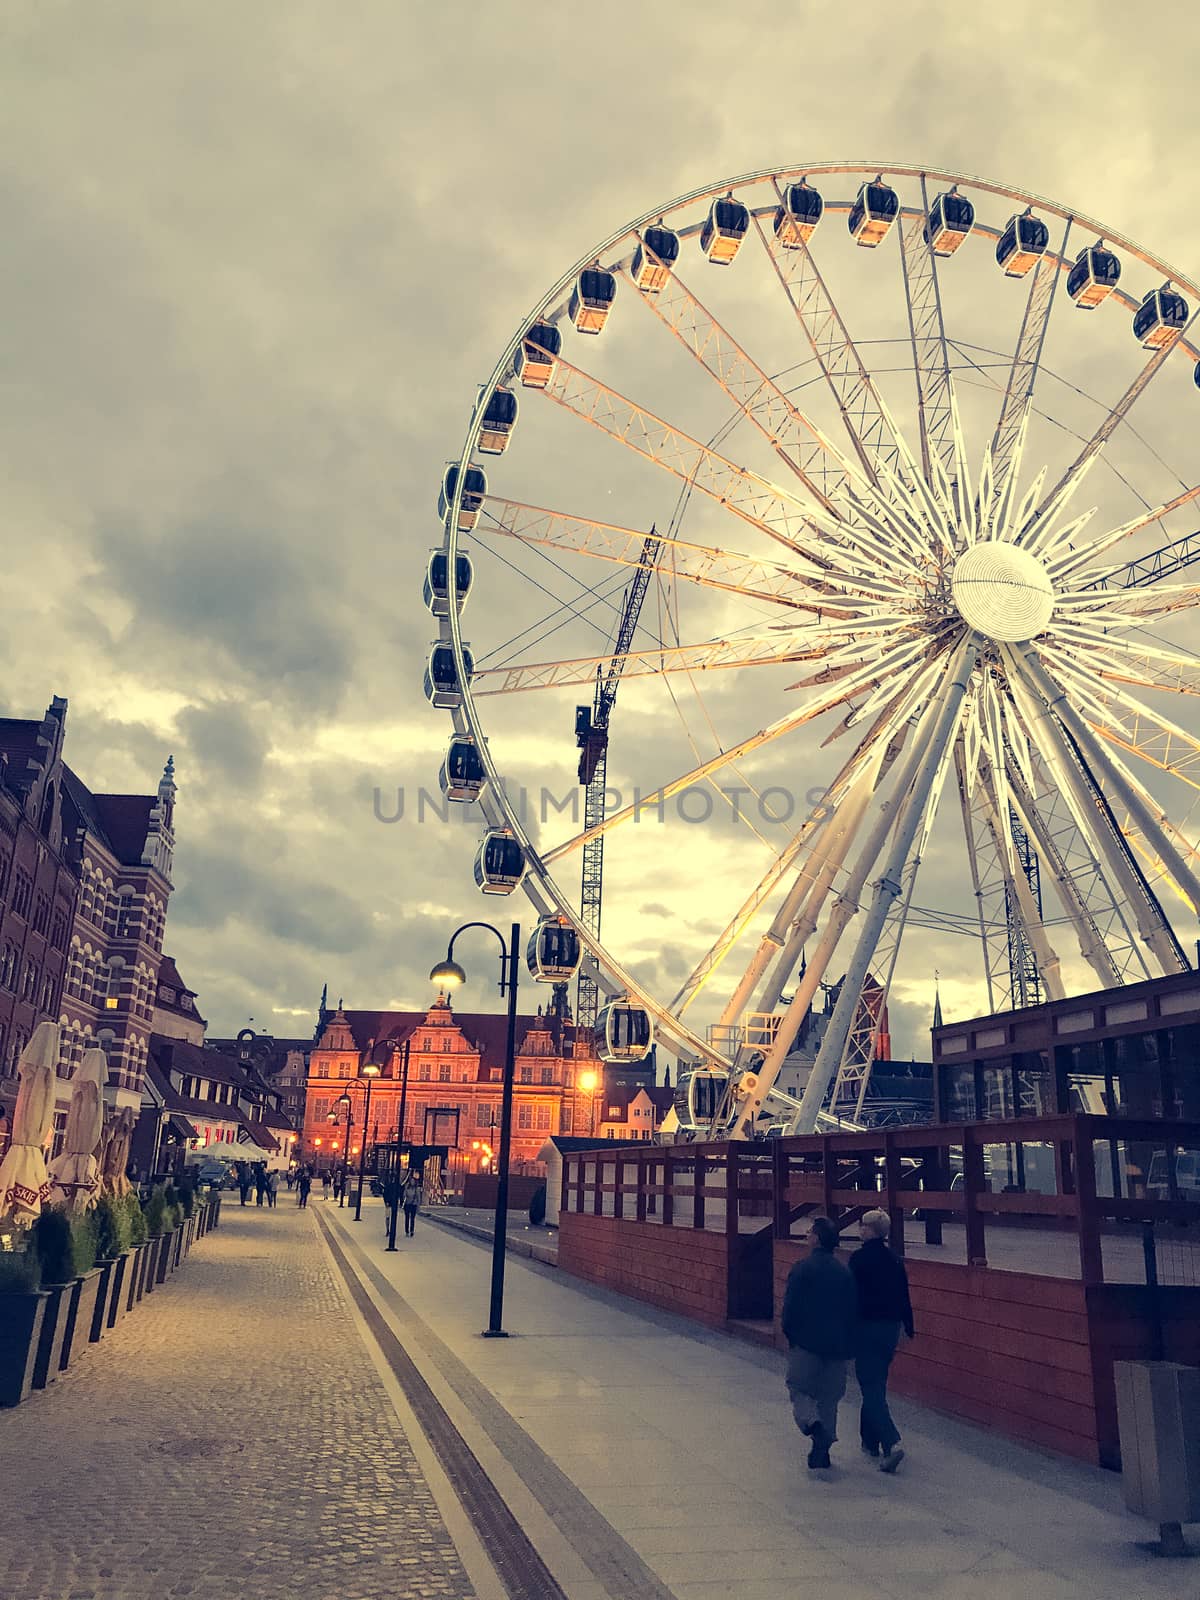 Great evening Ferris wheel in Gdansk, Poland by Softulka